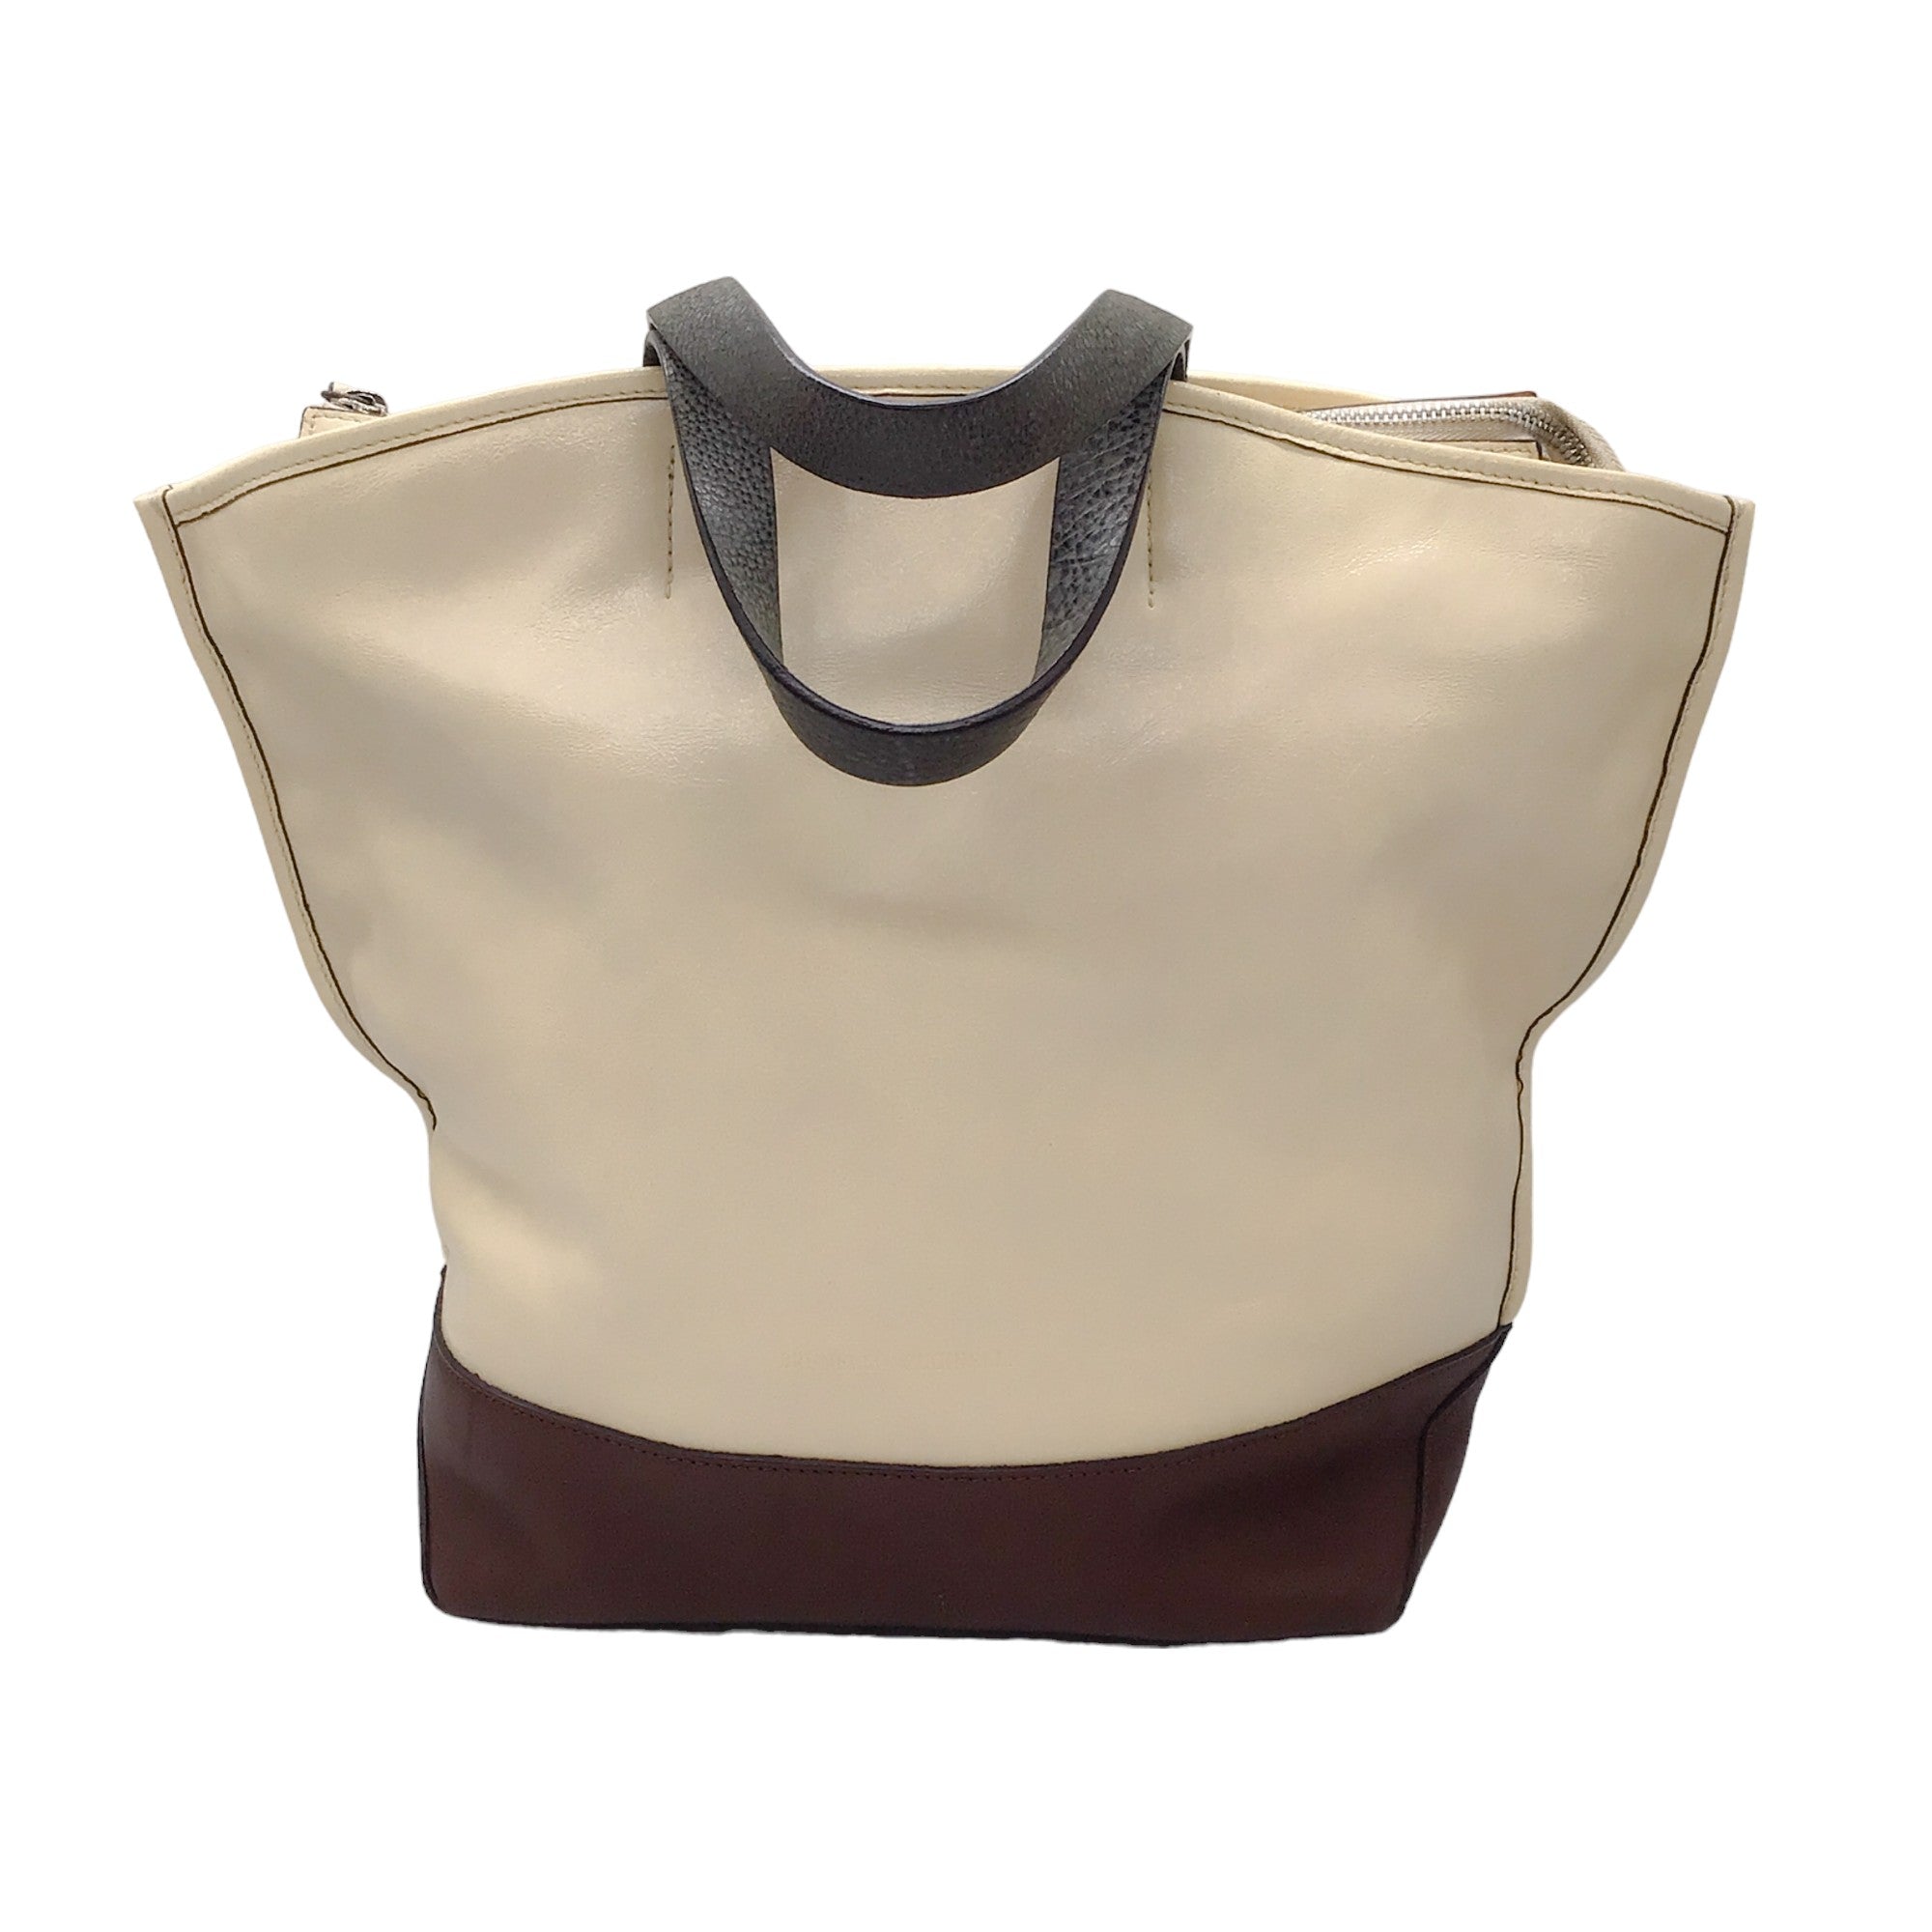 Bottega Venta Cream / Brown Colorblock Leather Handbag